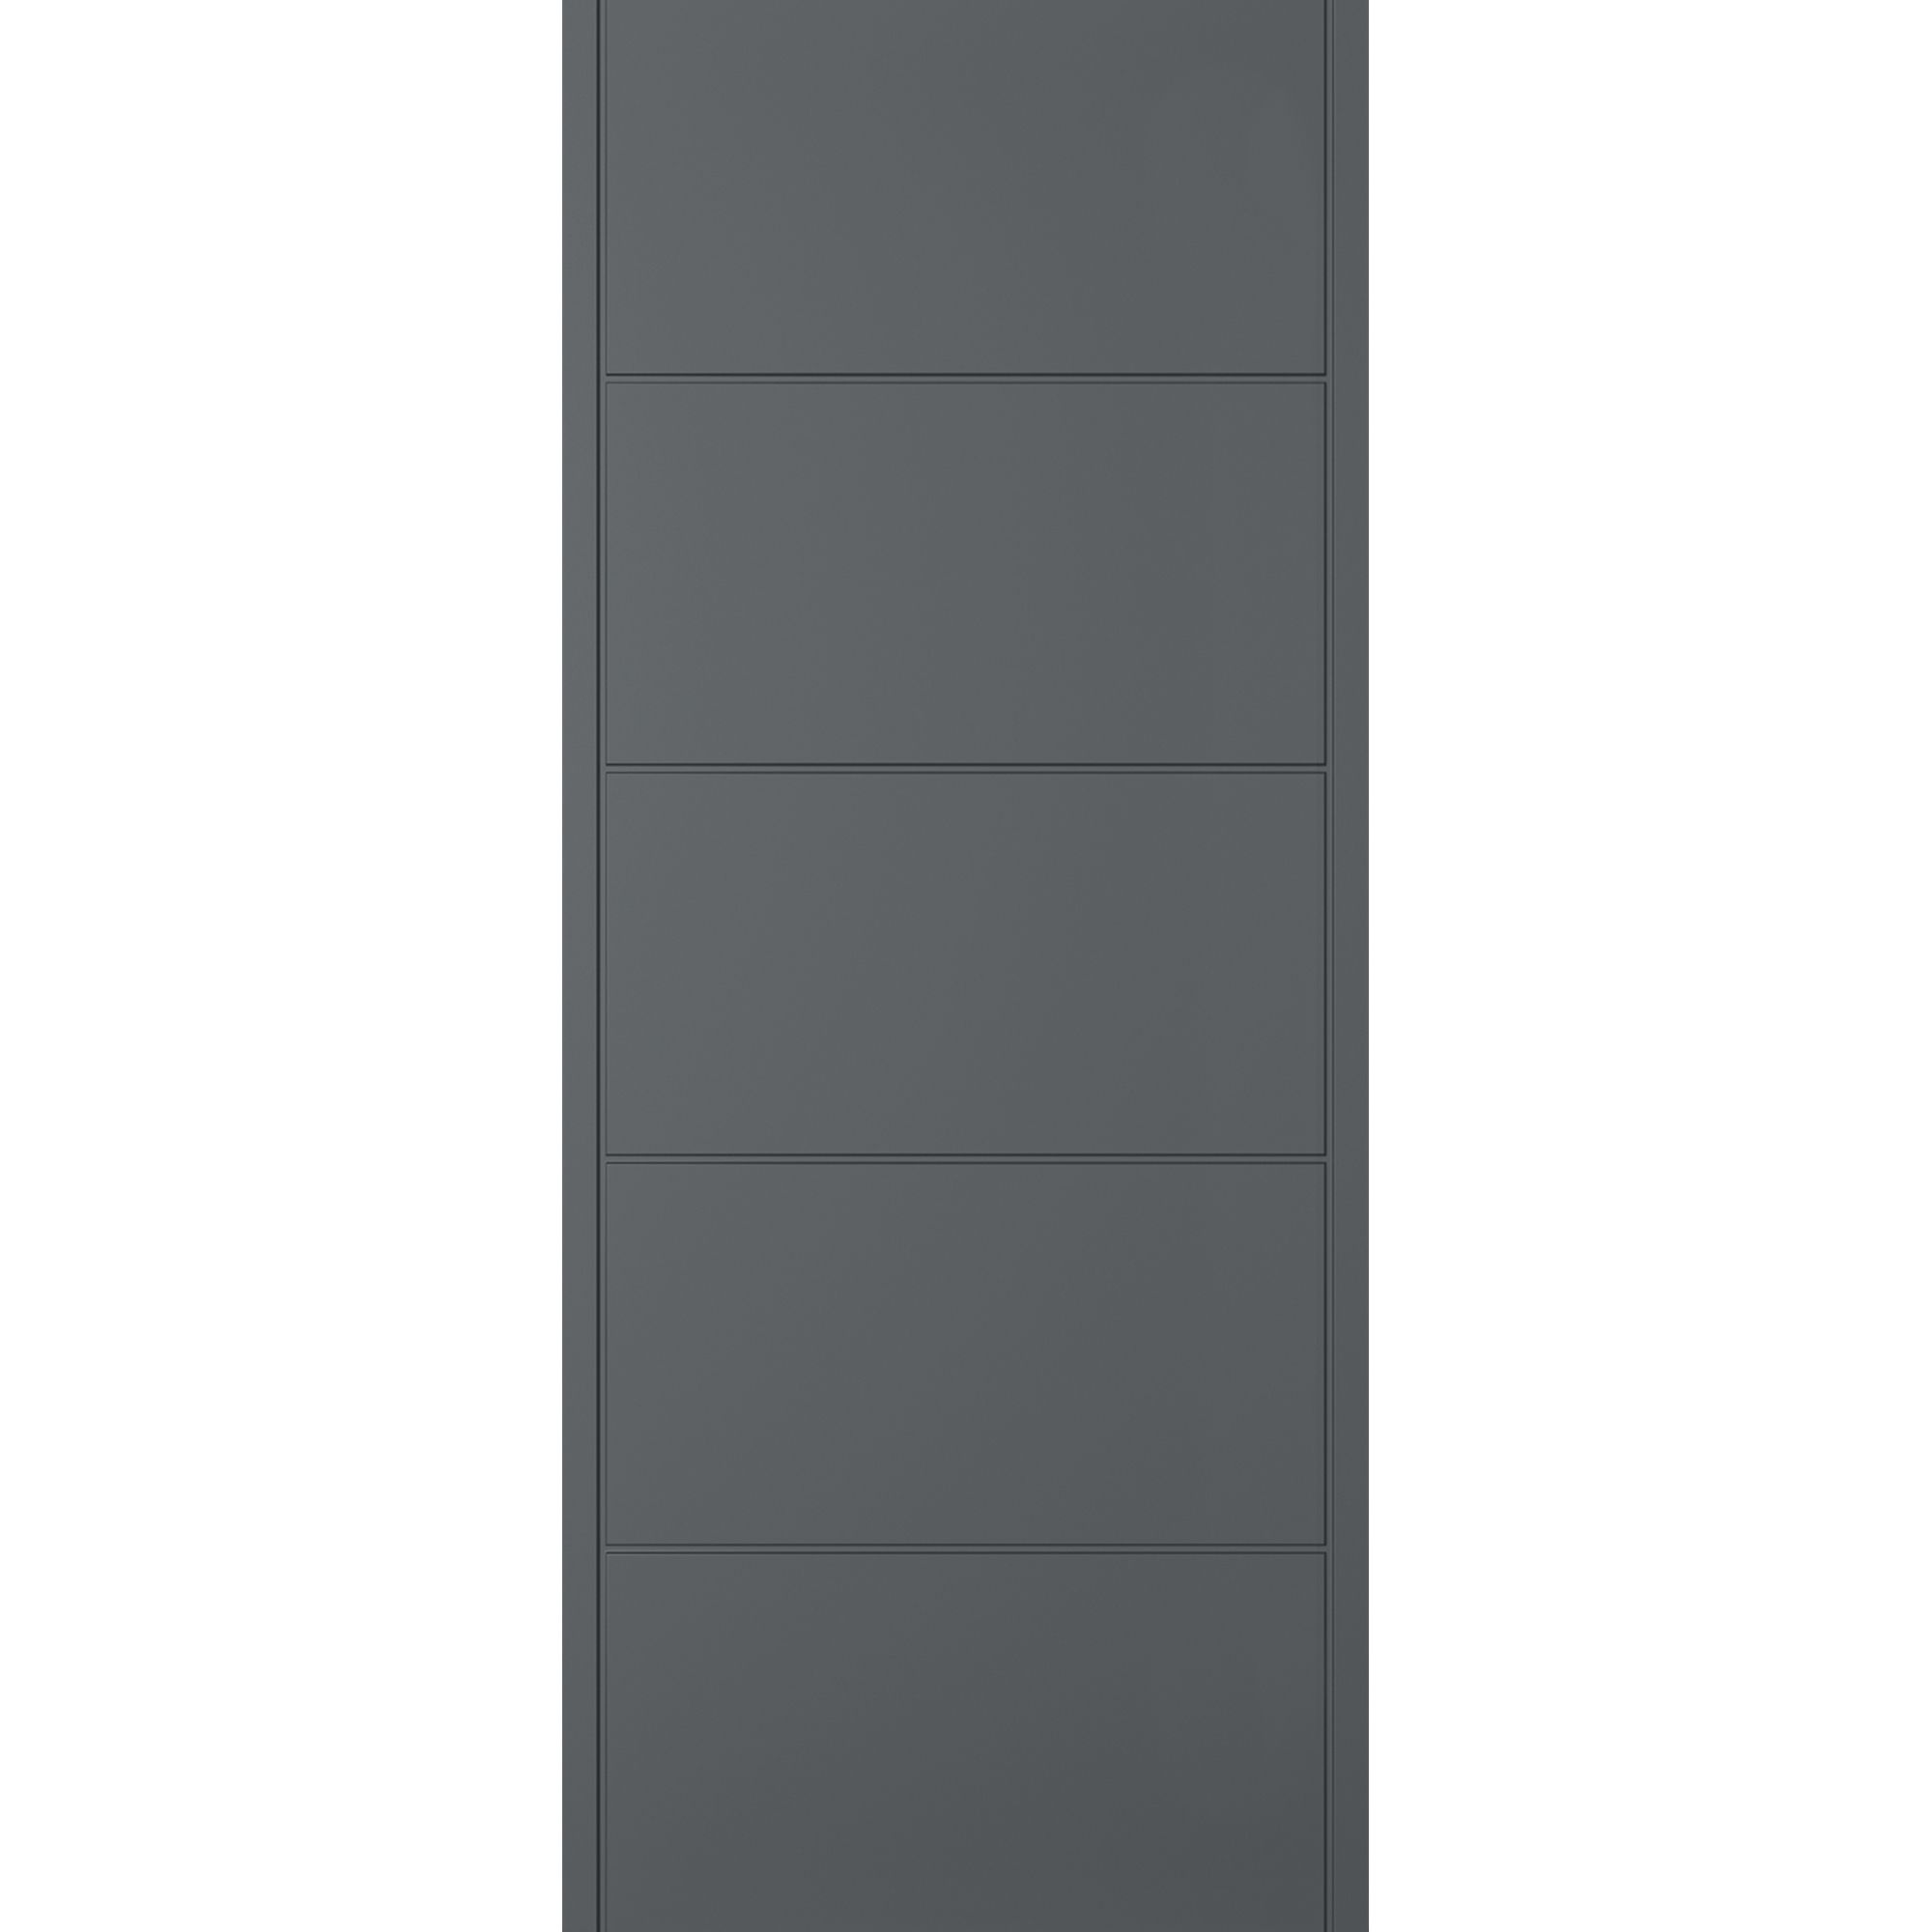 Linear 5 panel Unglazed Shaker Anthracite Composite External Panel Front door, (H)2032mm (W)813mm